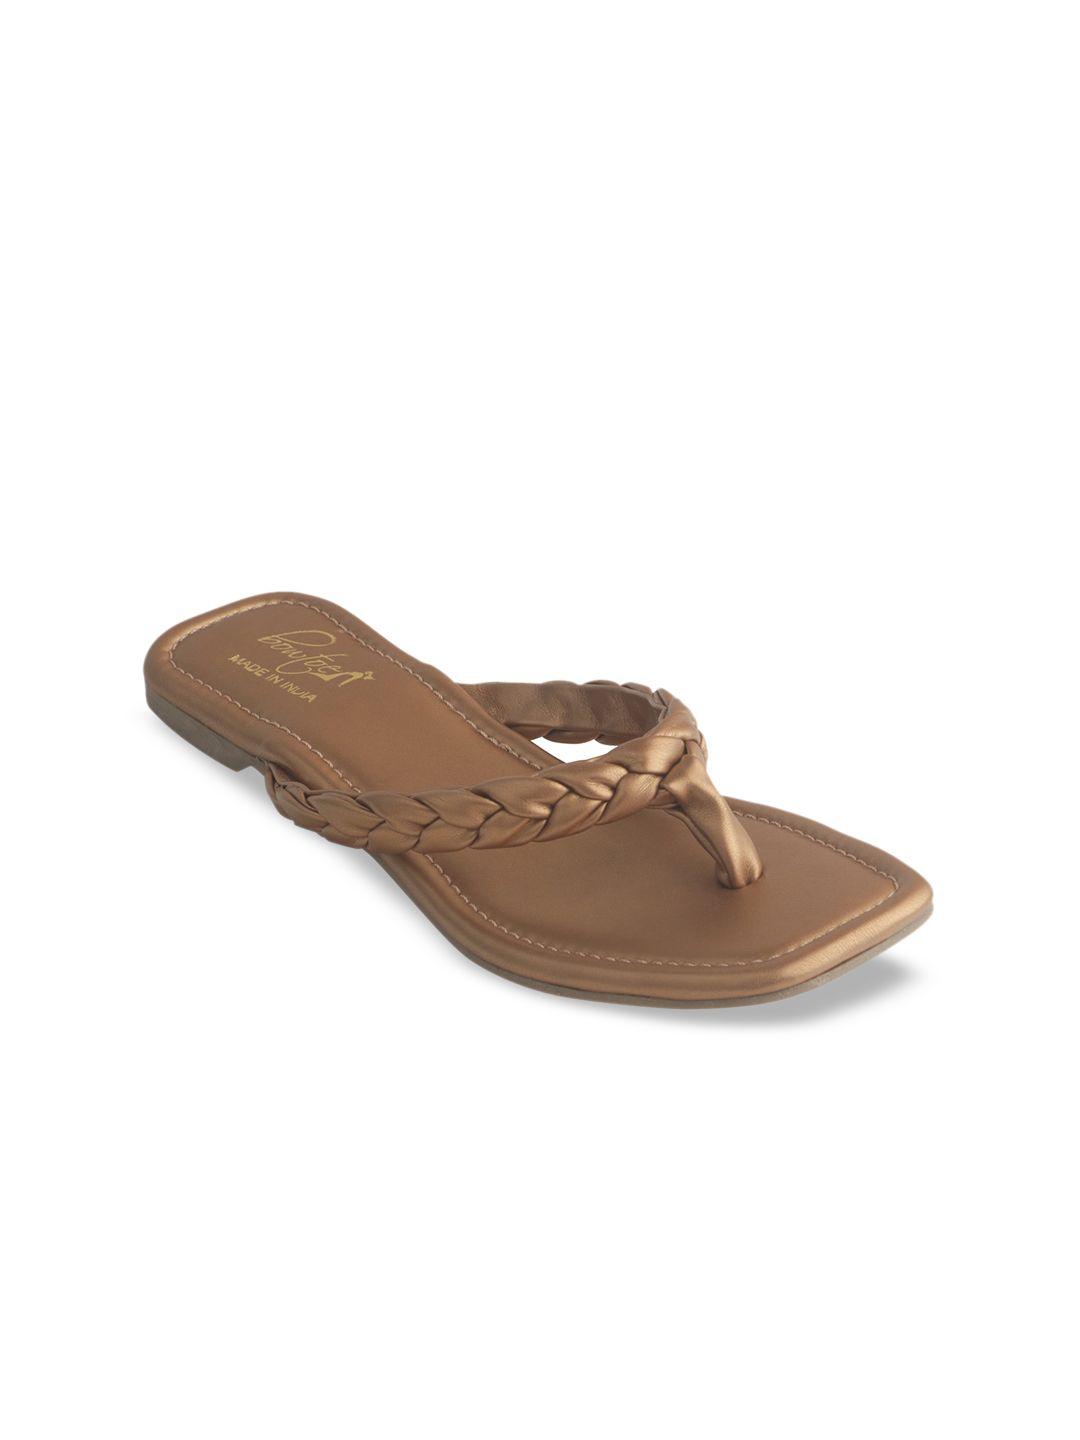 bowtoes-women-bronze-toned-open-toe-flats